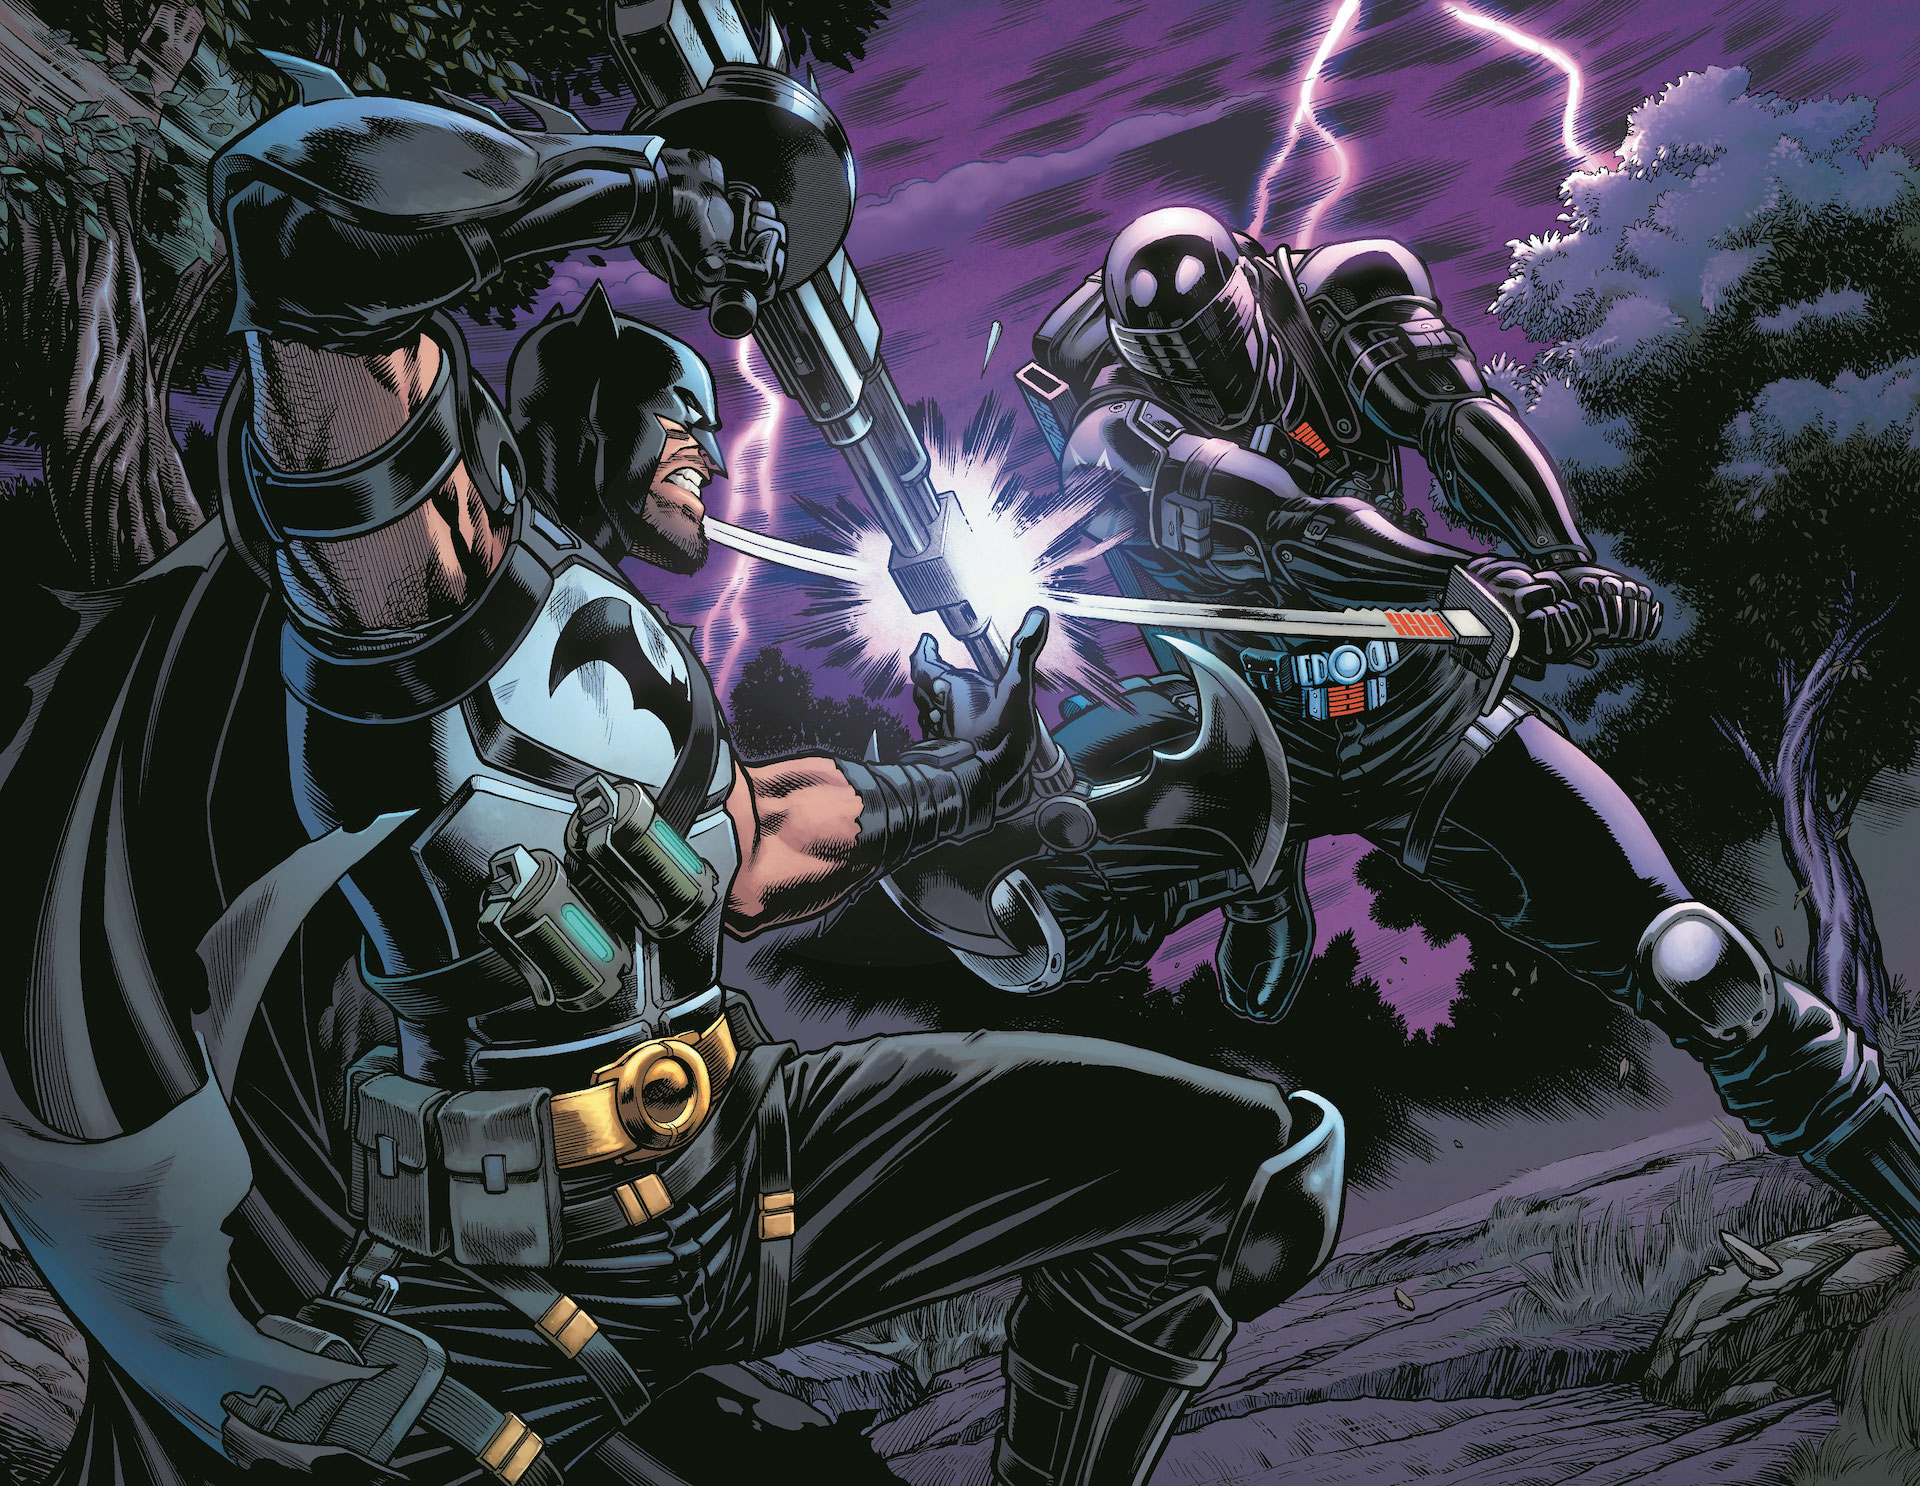 DC Preview: Batman/Fortnite: Zero Point #3 featuring Snake-Eyes!